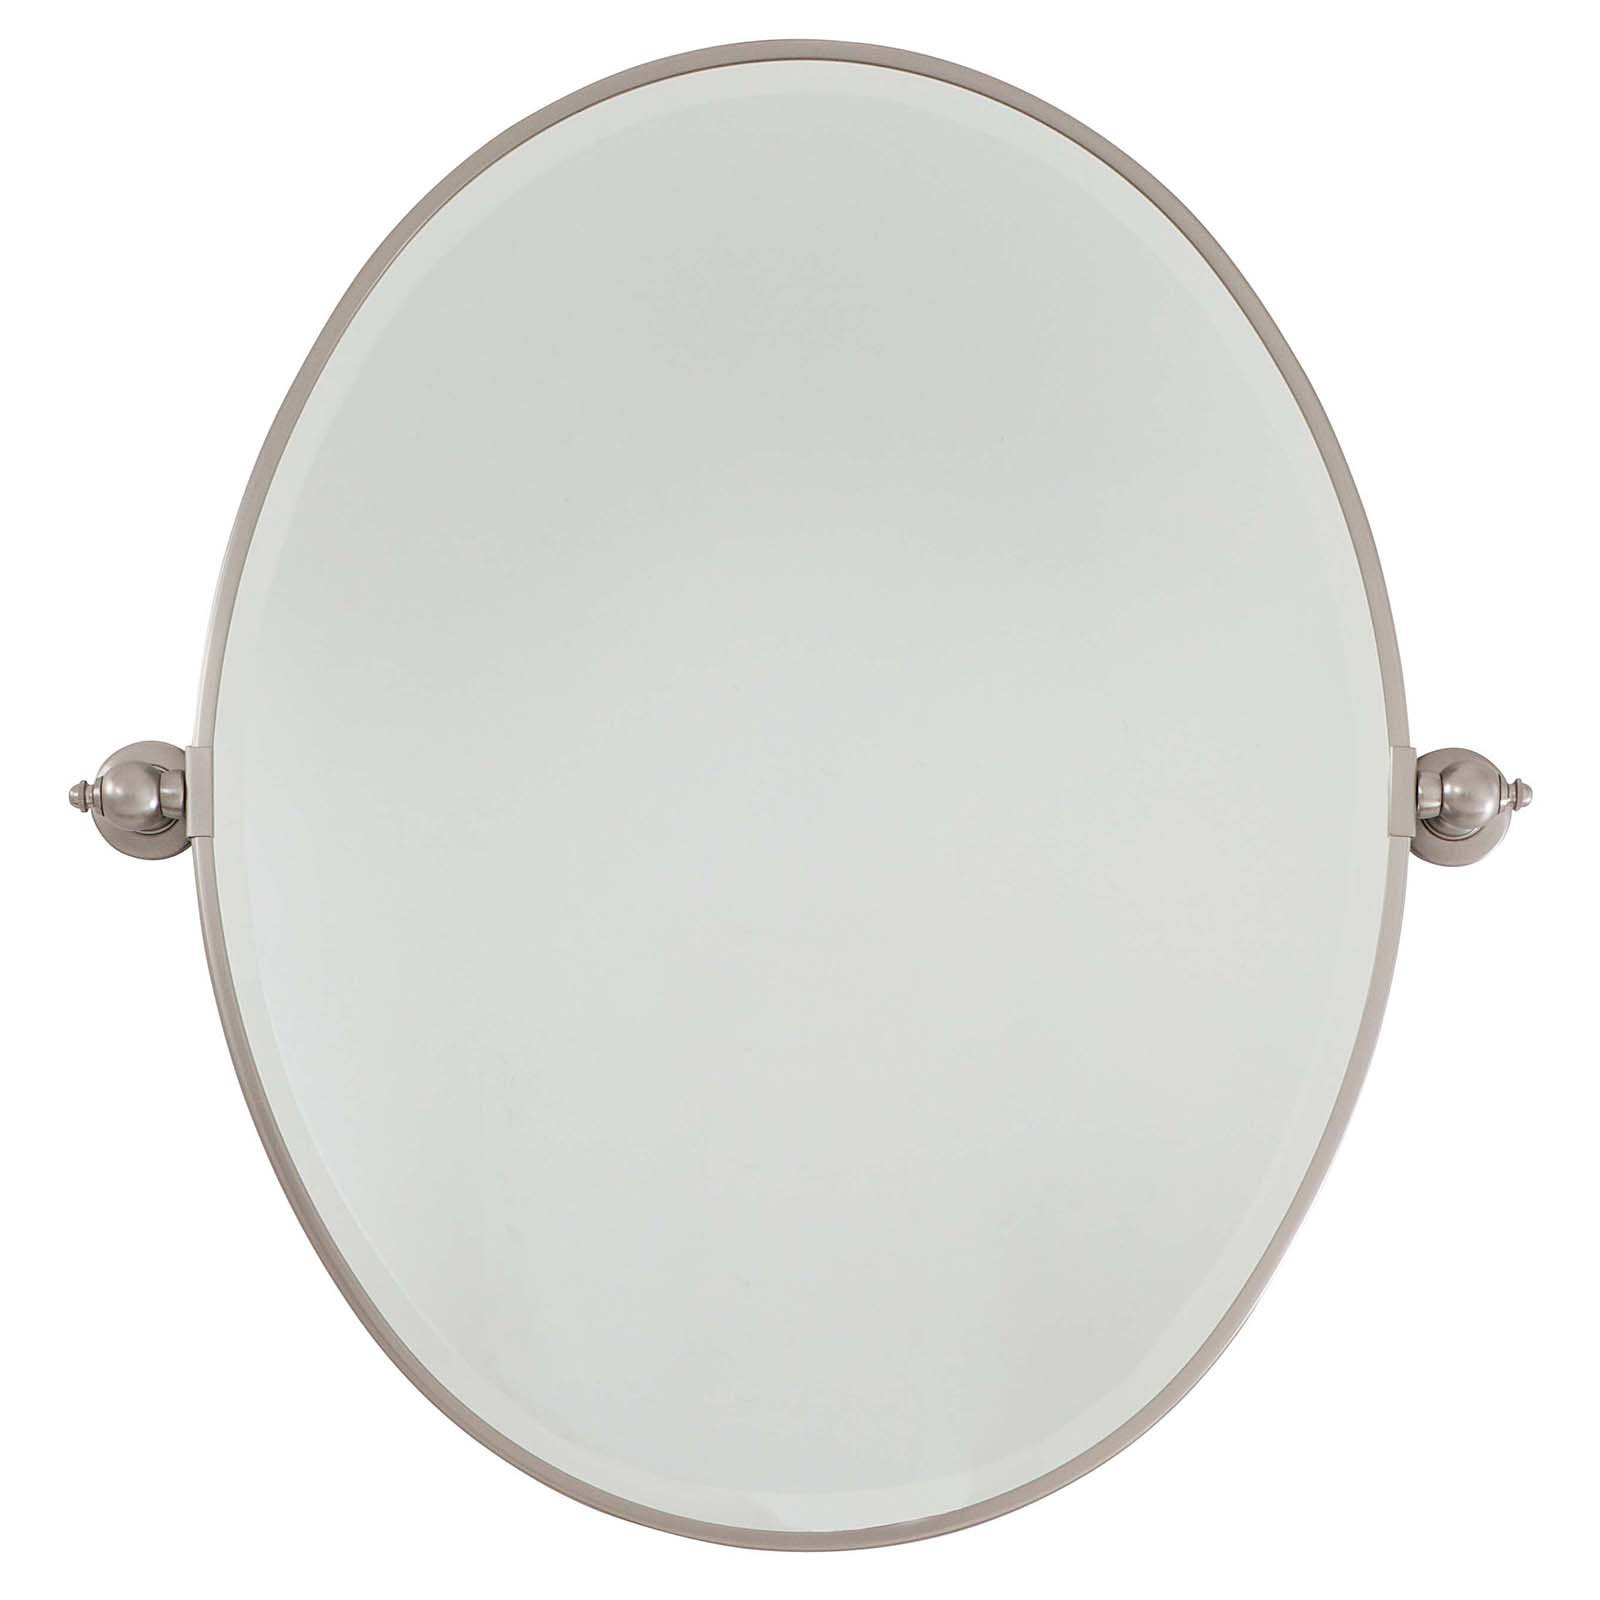 Walmart Bathroom Mirrors
 Minka Lavery Oval Beveled Wall Mirror Walmart